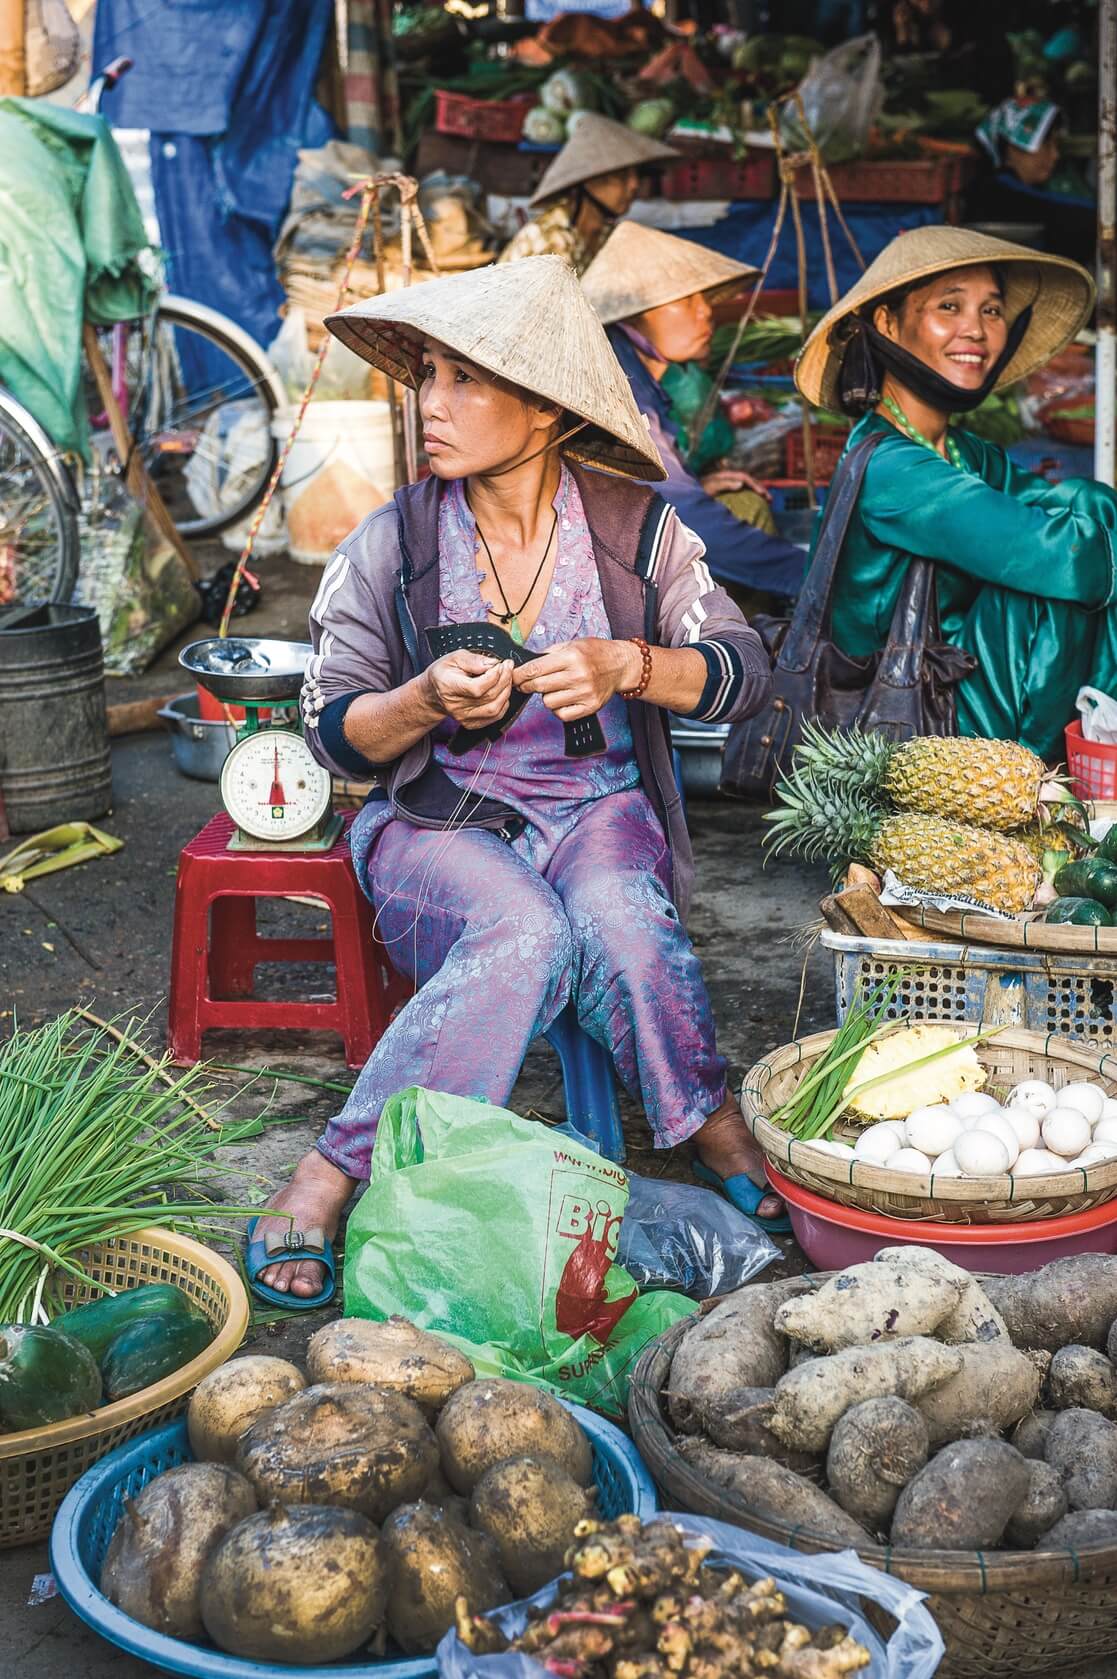 A woman sells vegetables at a market in Saigon